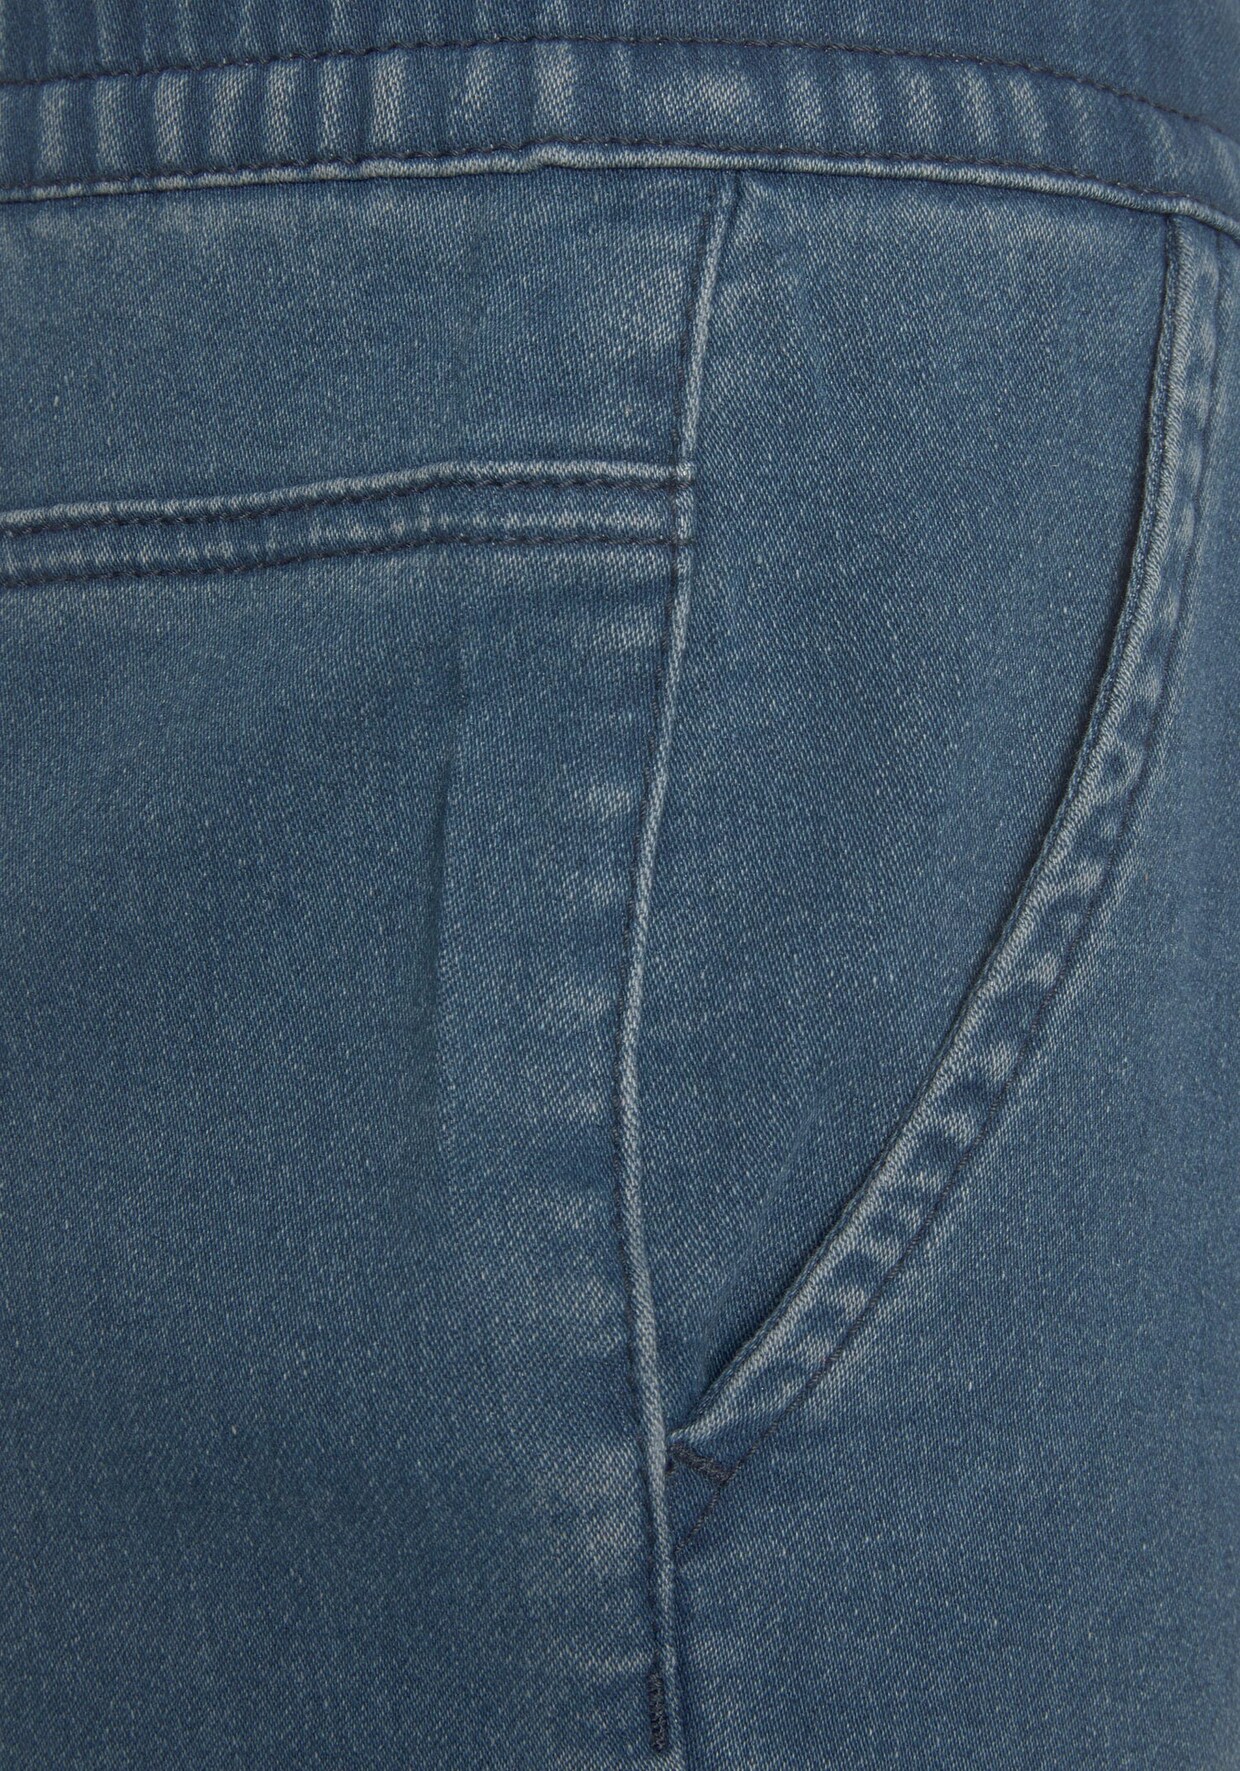 Bench. Jogger Pants - blau-washed